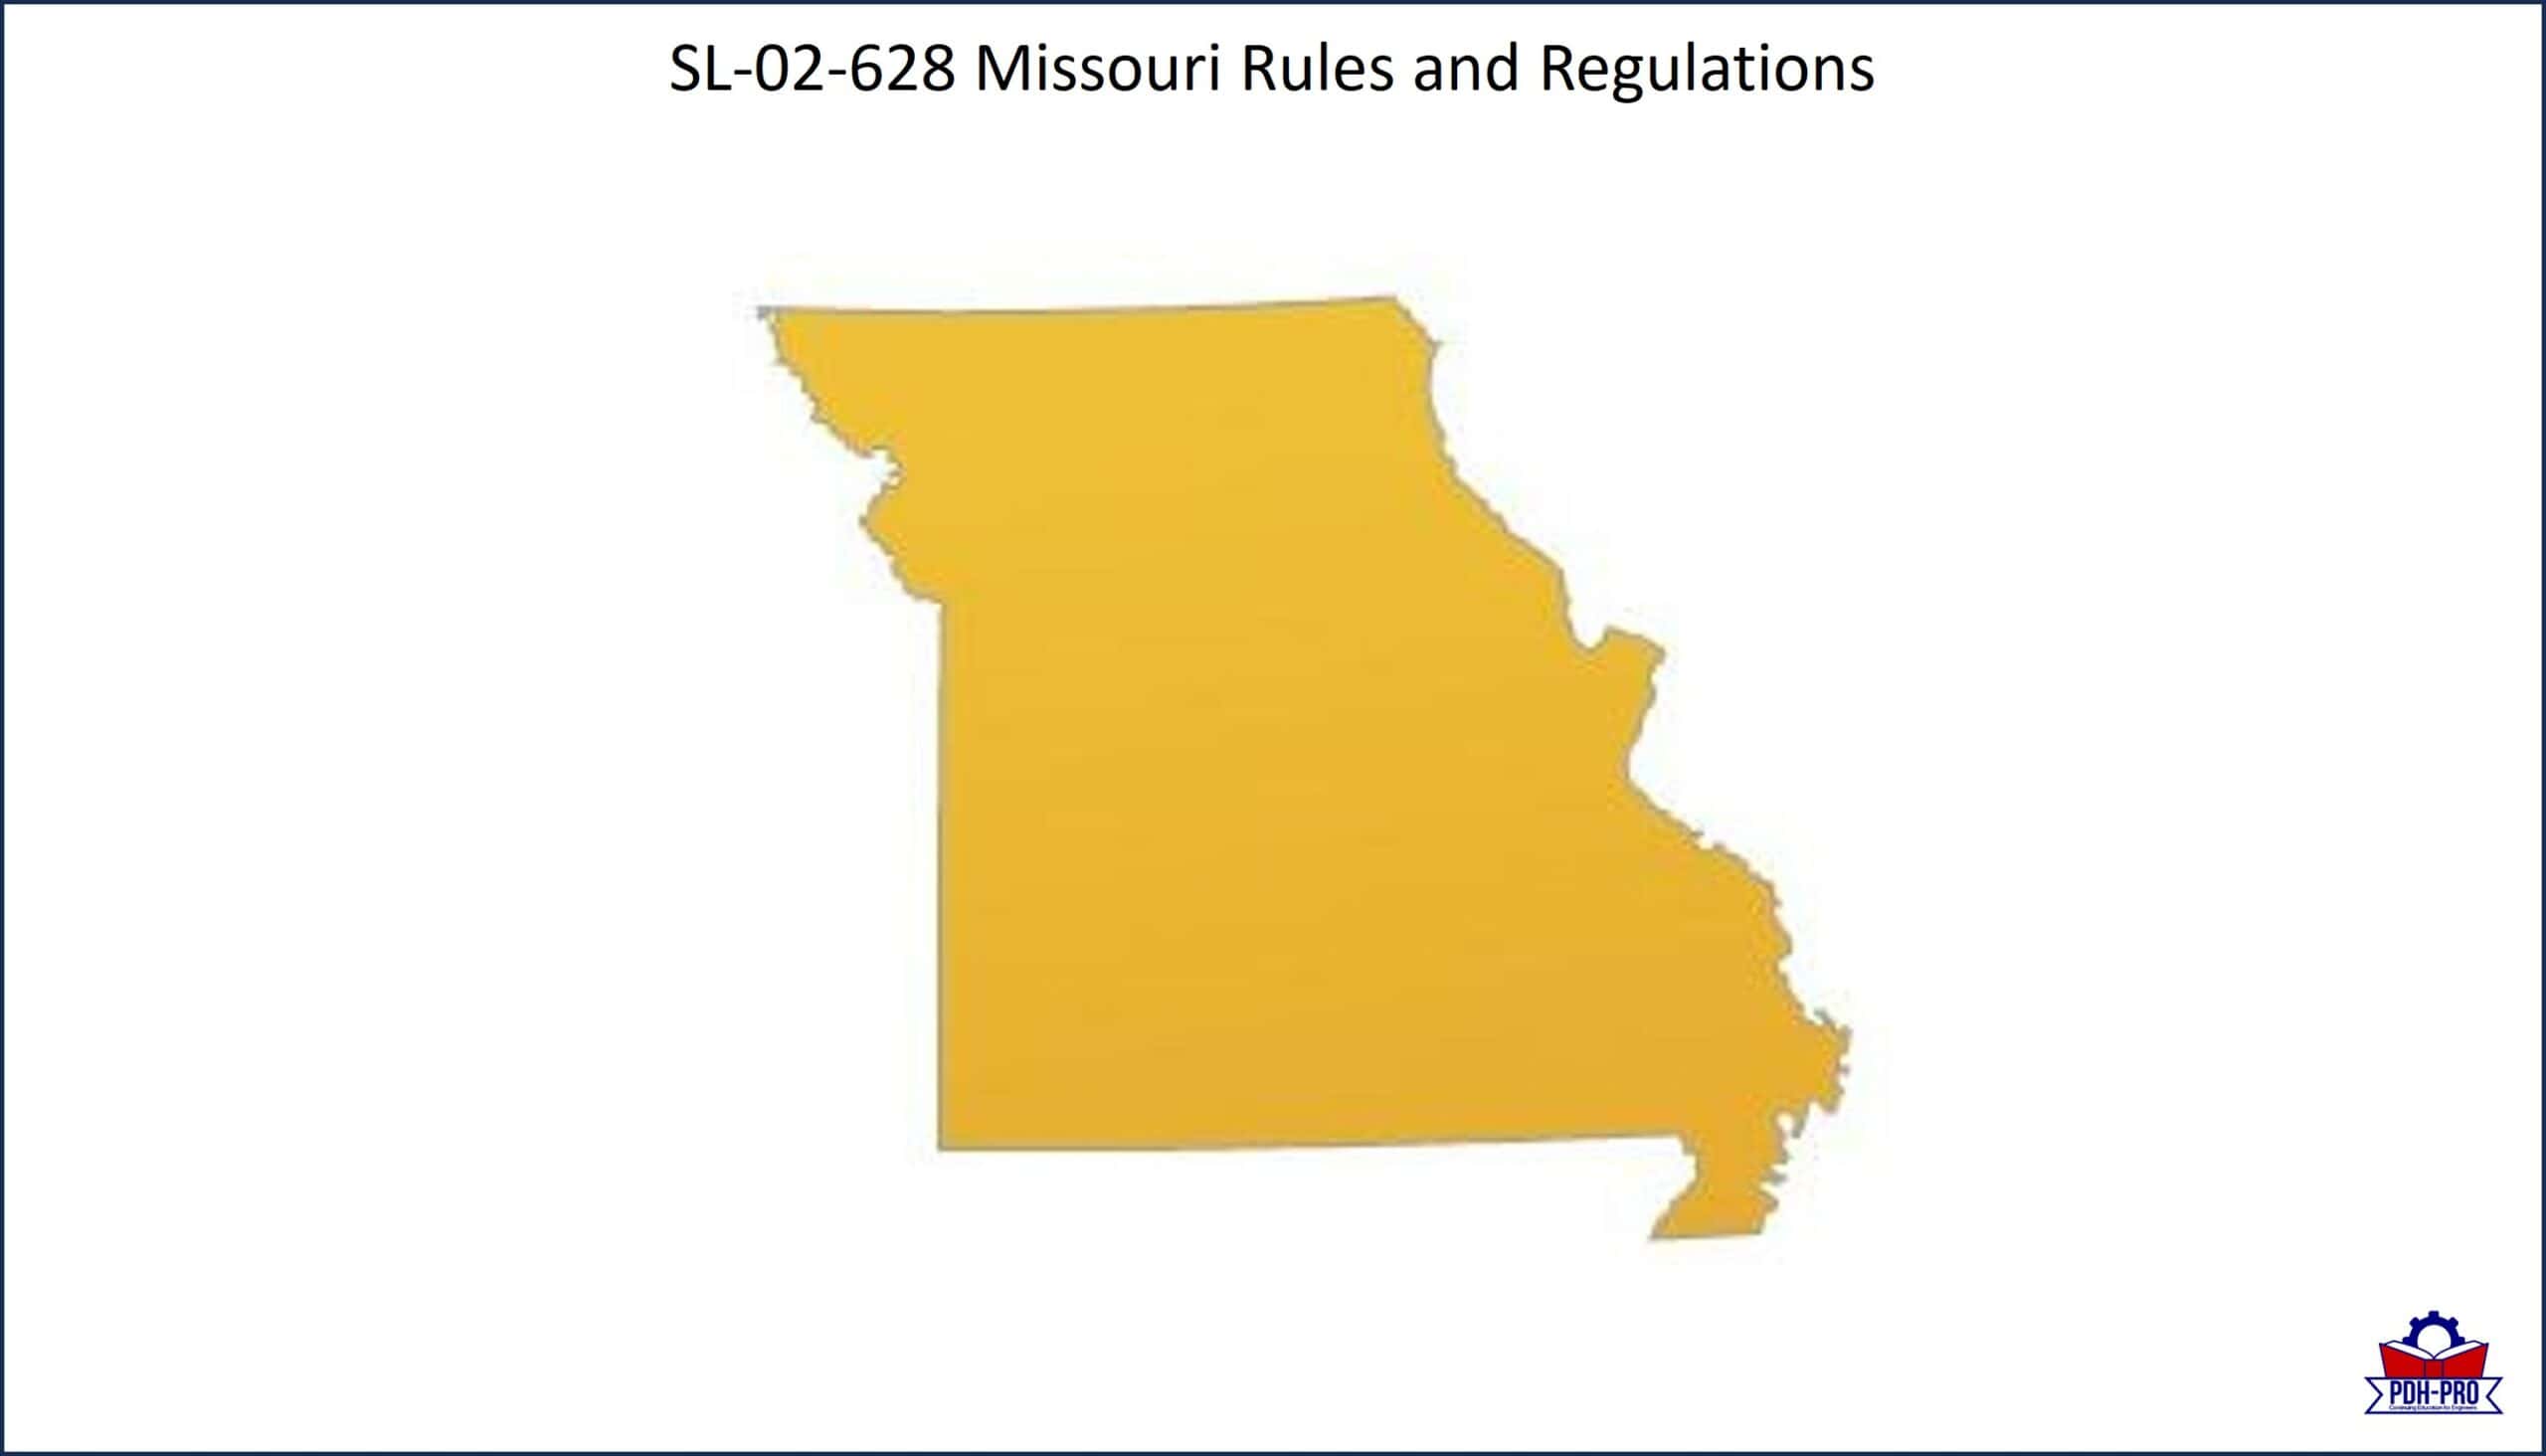 Missouri Rules and Regulations